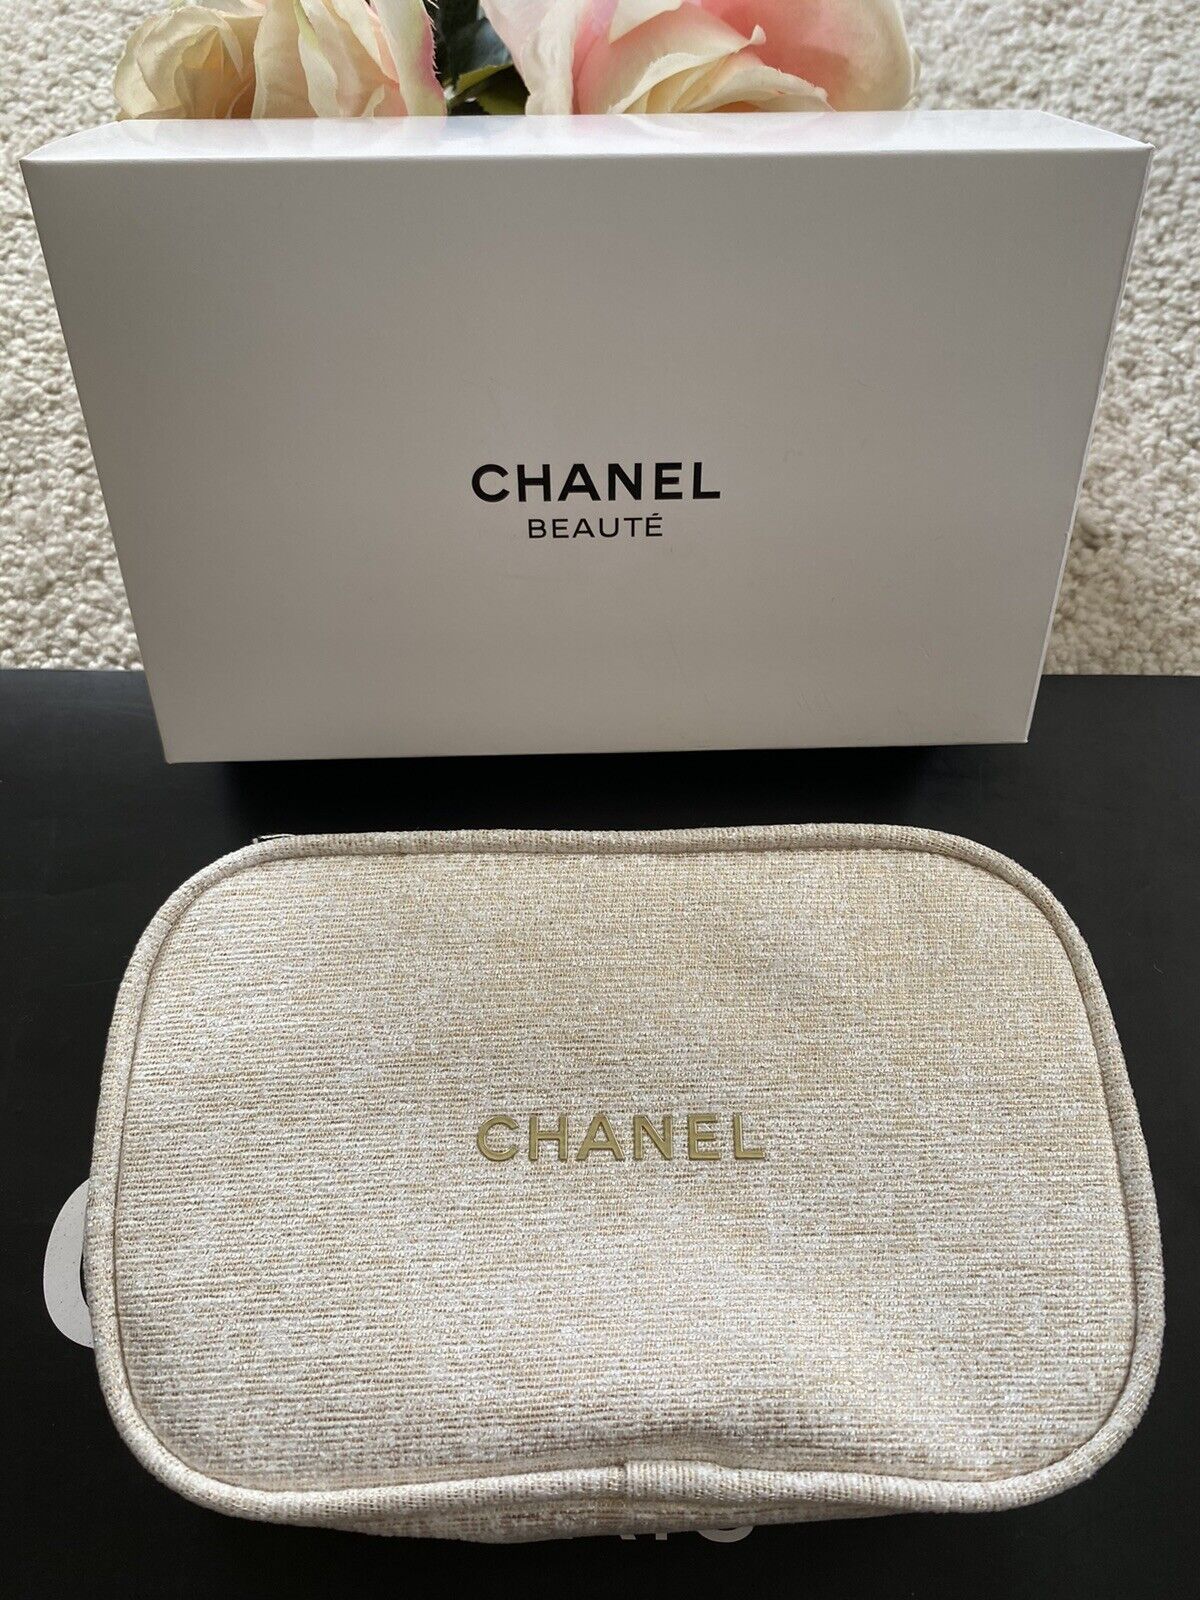 CHANEL BEAUTÉ cosmetic bag- Makeup Bag- Limited Ediction Gold Bag